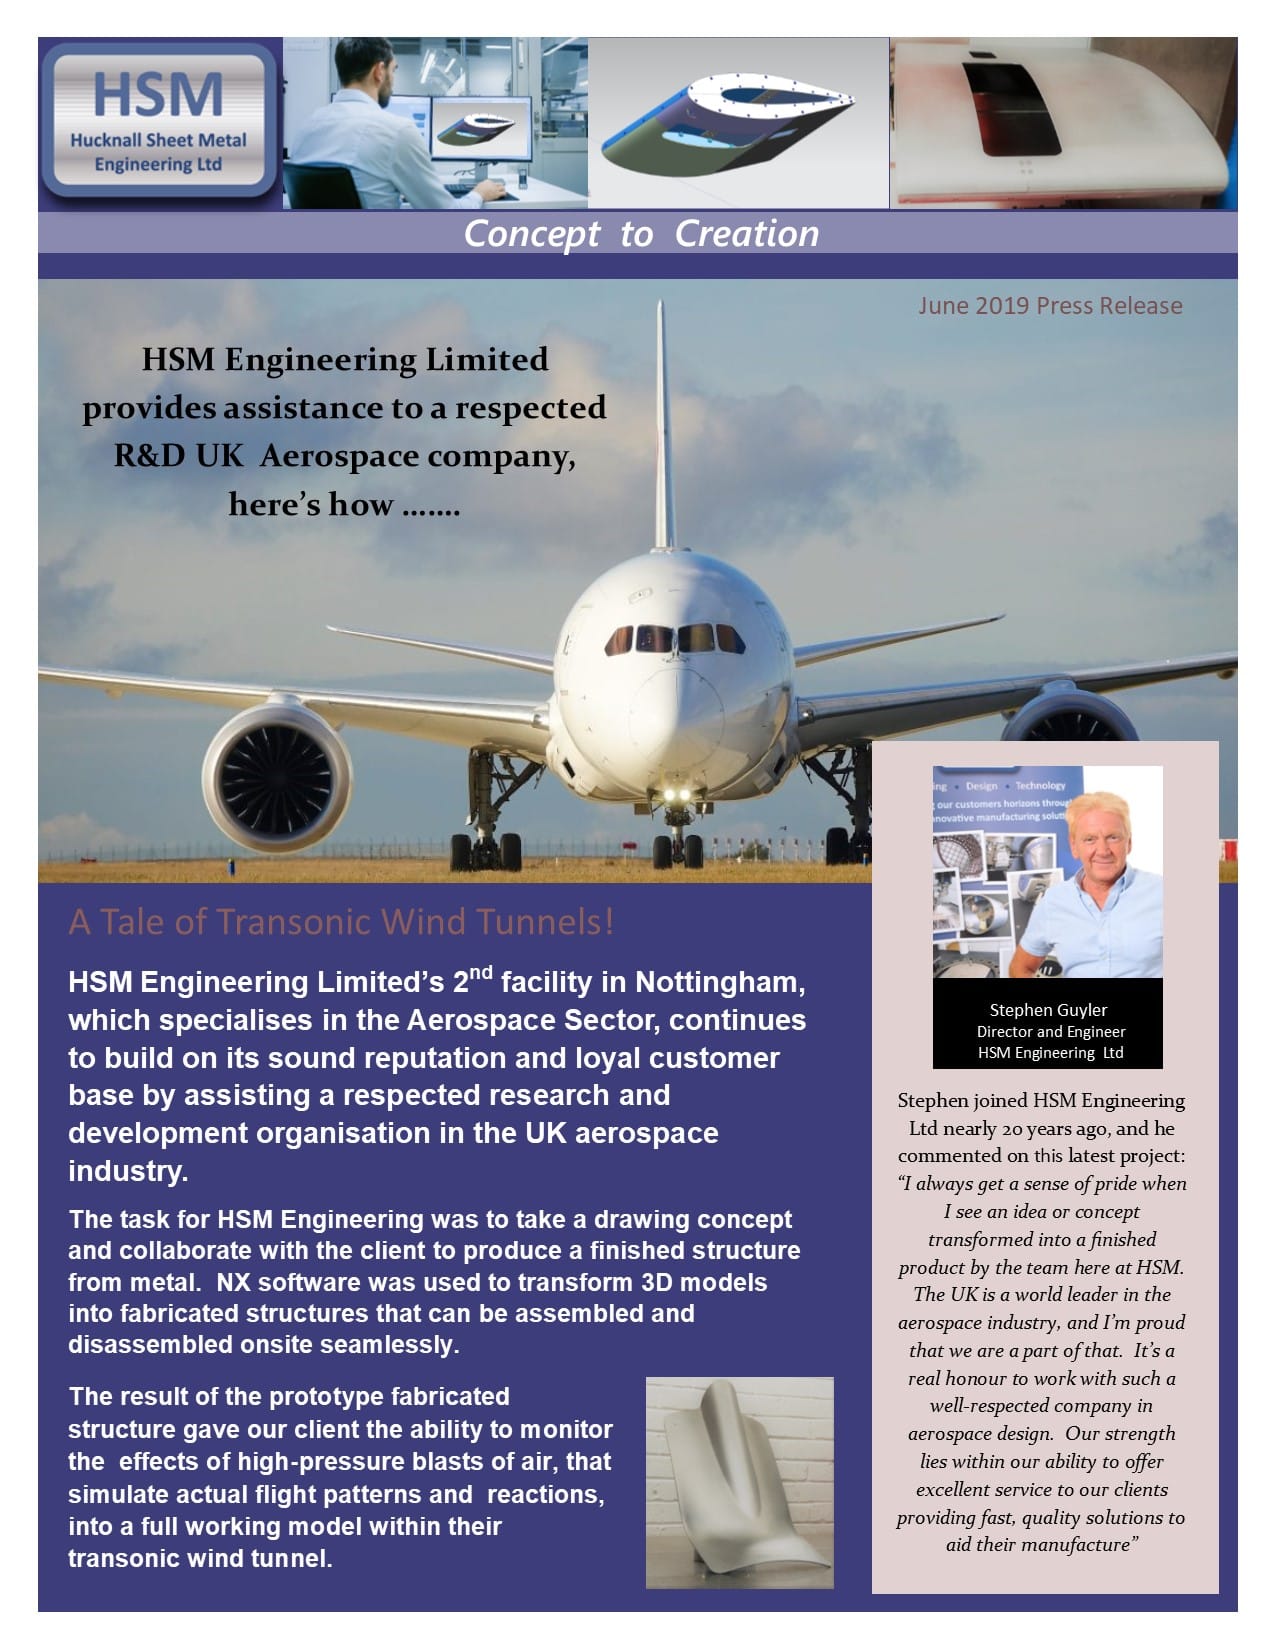 Wind tunnel UK Aerospace case study - HSM Engineering Ltd - HSM aero & eviation parts